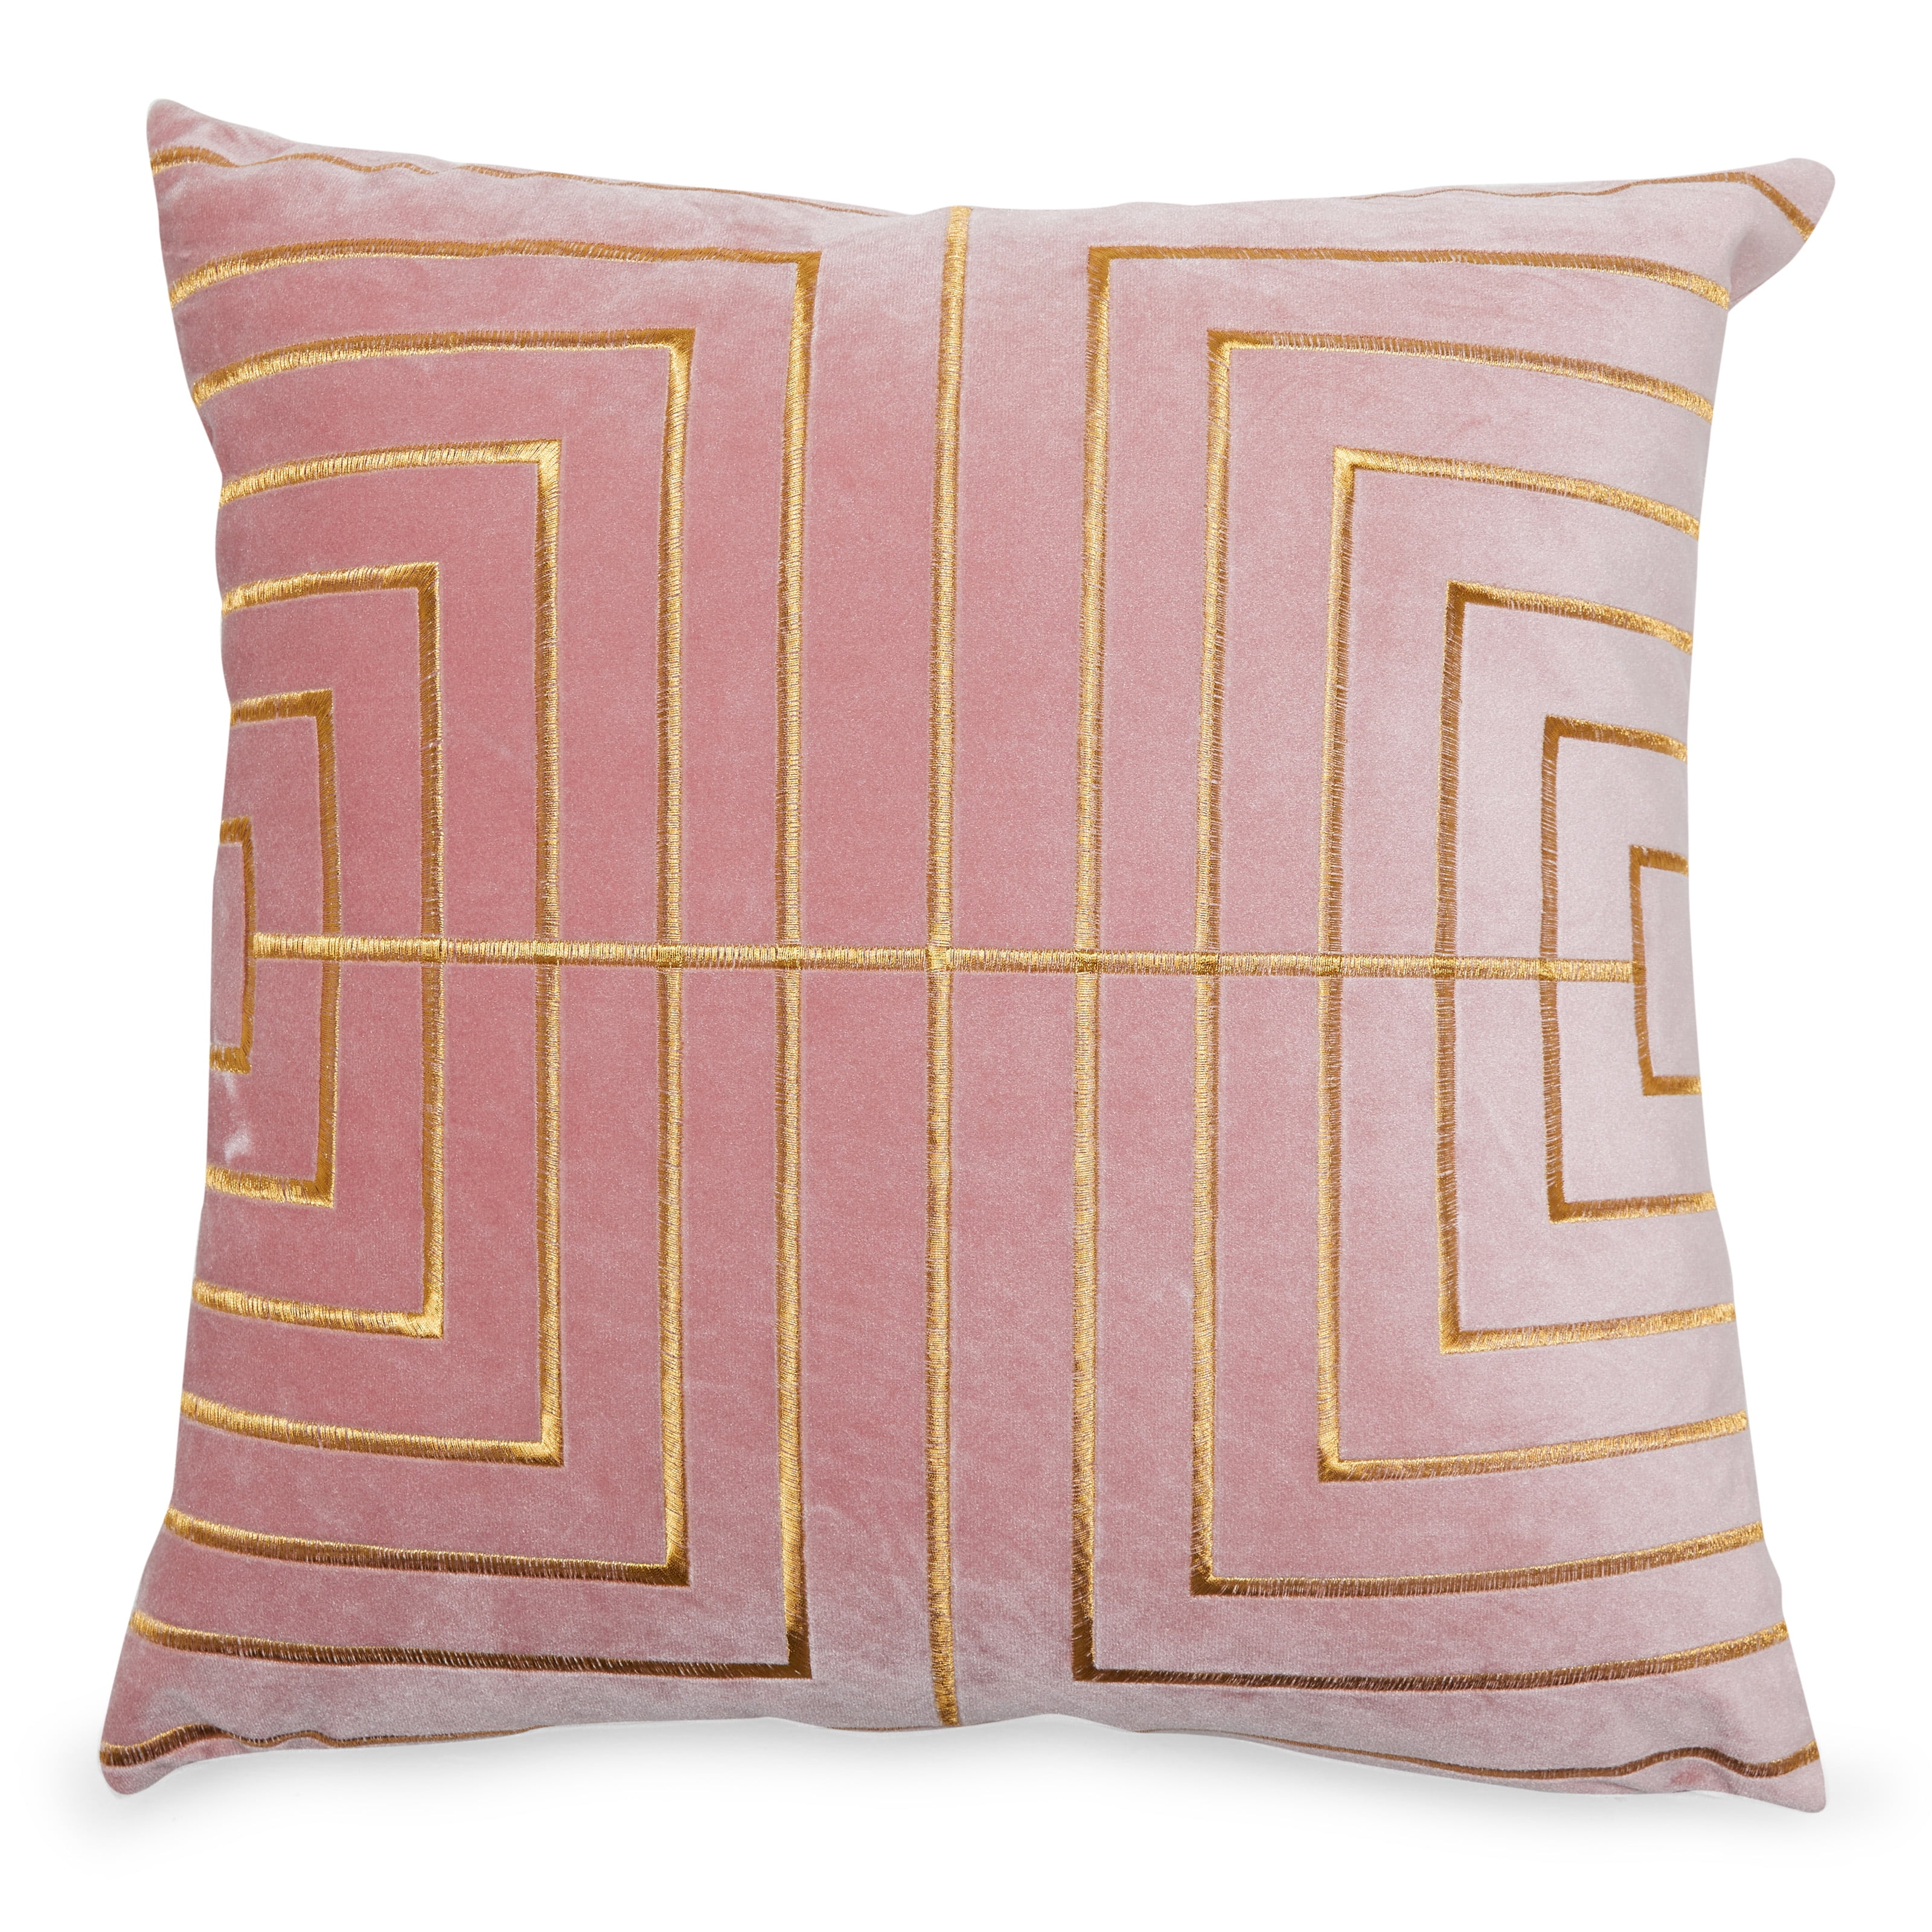 Gold Foil Pillow Cover 20x20 Decorative Pillow Glam Pillow Pillows Decor Metallic Pillow